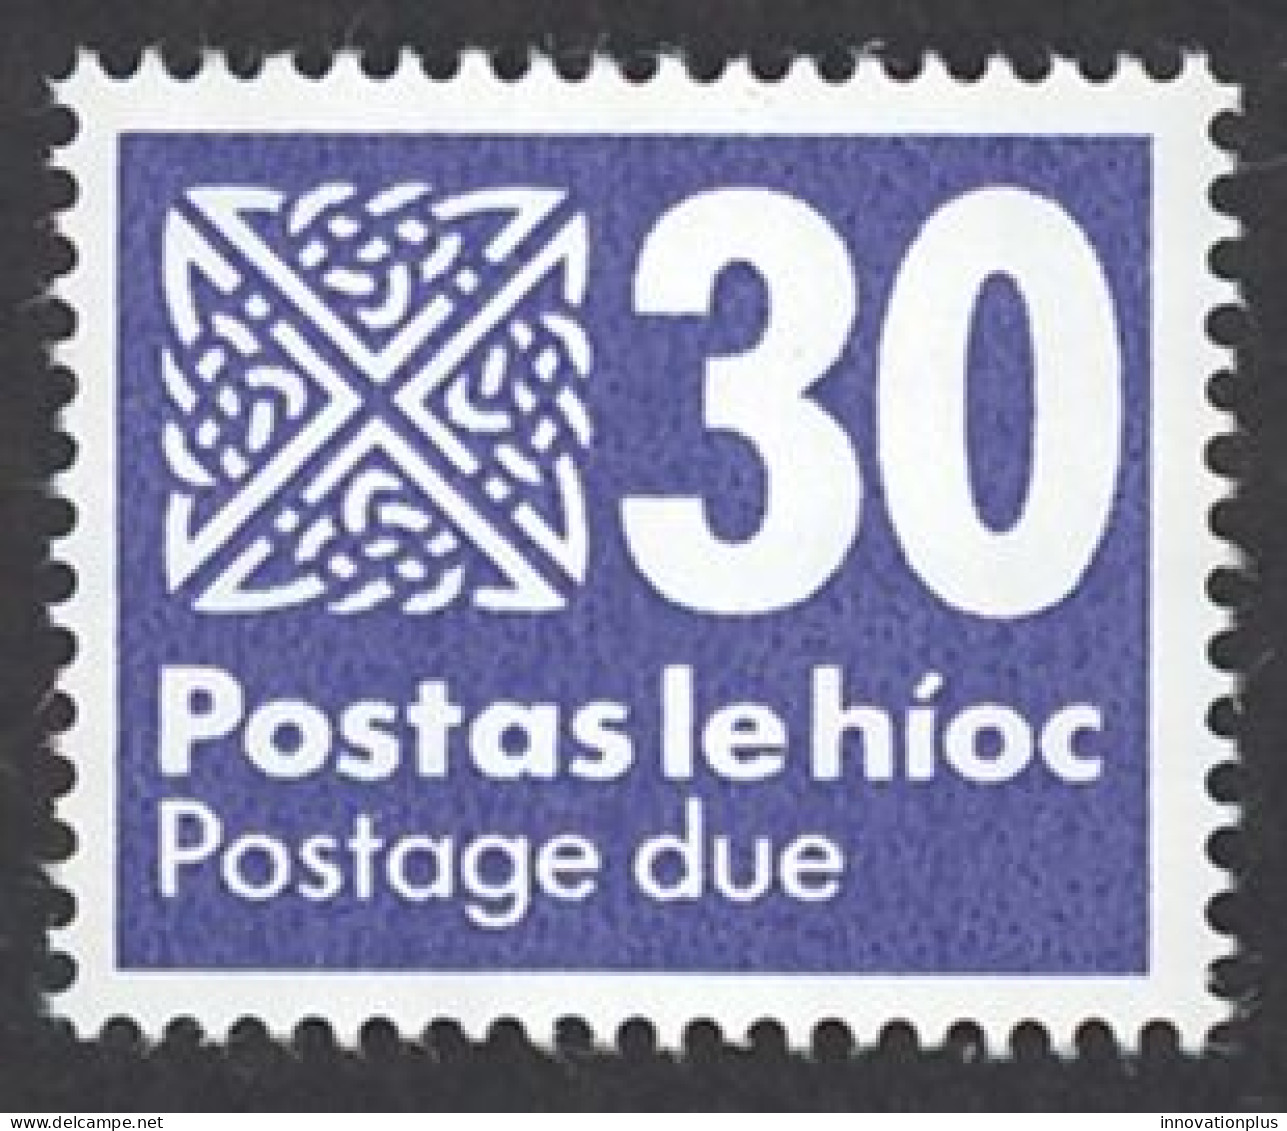 Ireland Sc# J35 MNH 1985 30p Postage Due - Impuestos